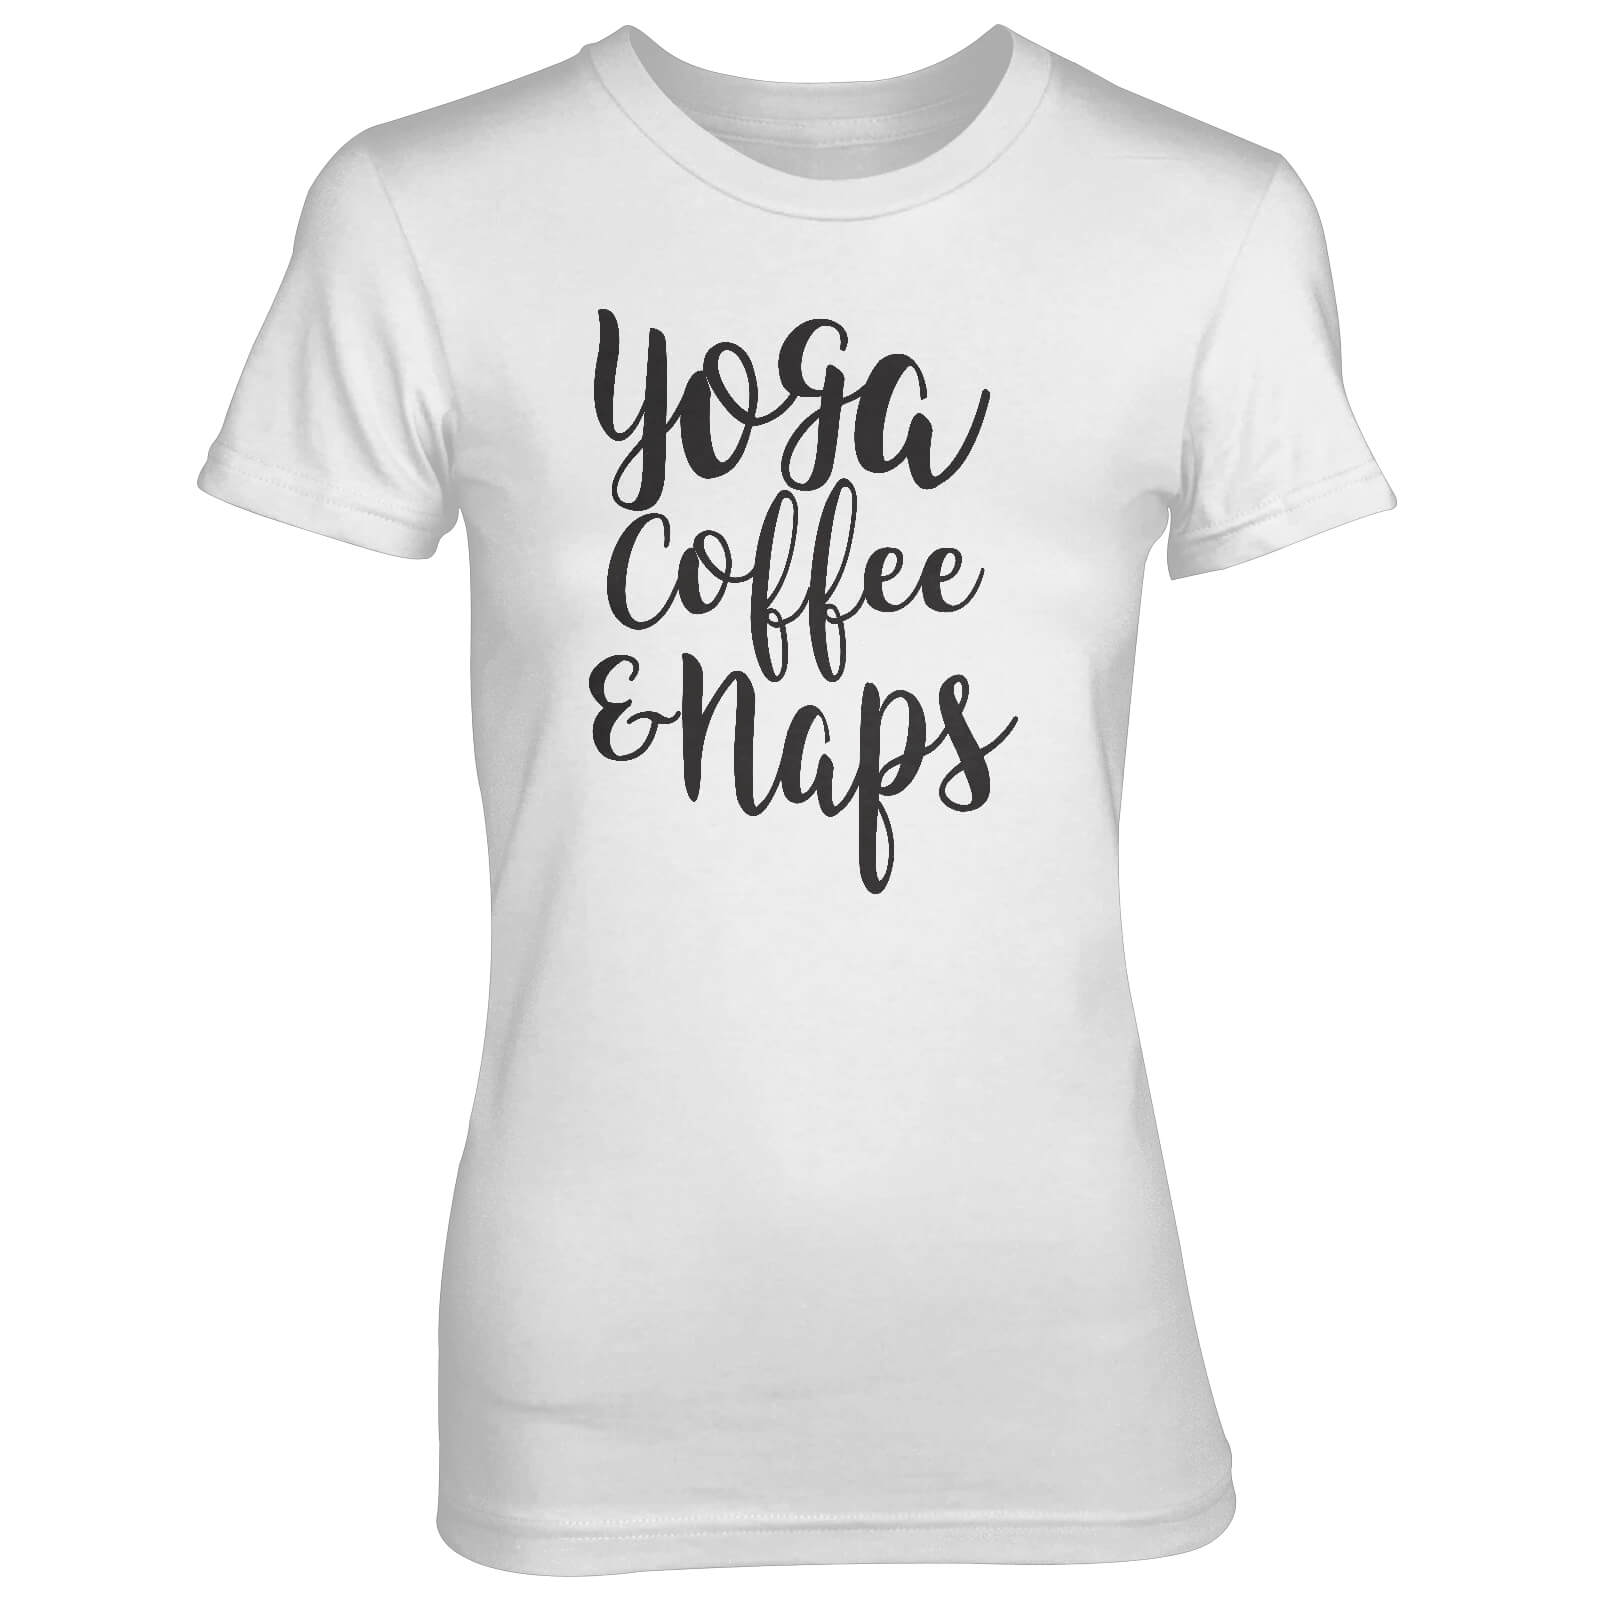 Yoga Coffee And Naps Women's White T-Shirt - S - White